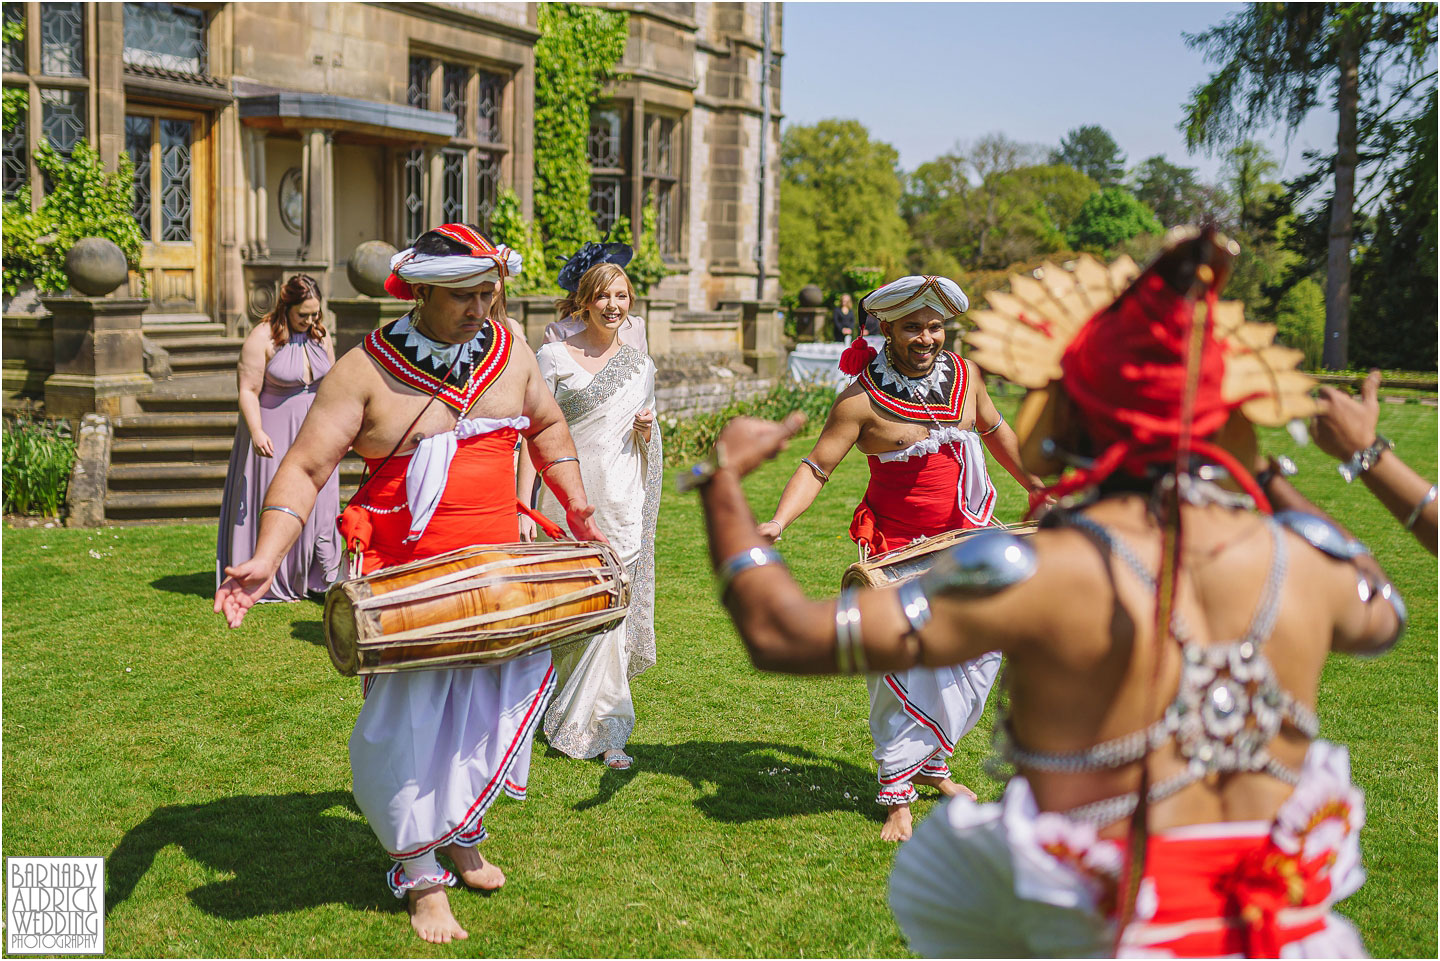 Sri Lankan entrance wedding photos at Thornbridge Hall in Derbyshire